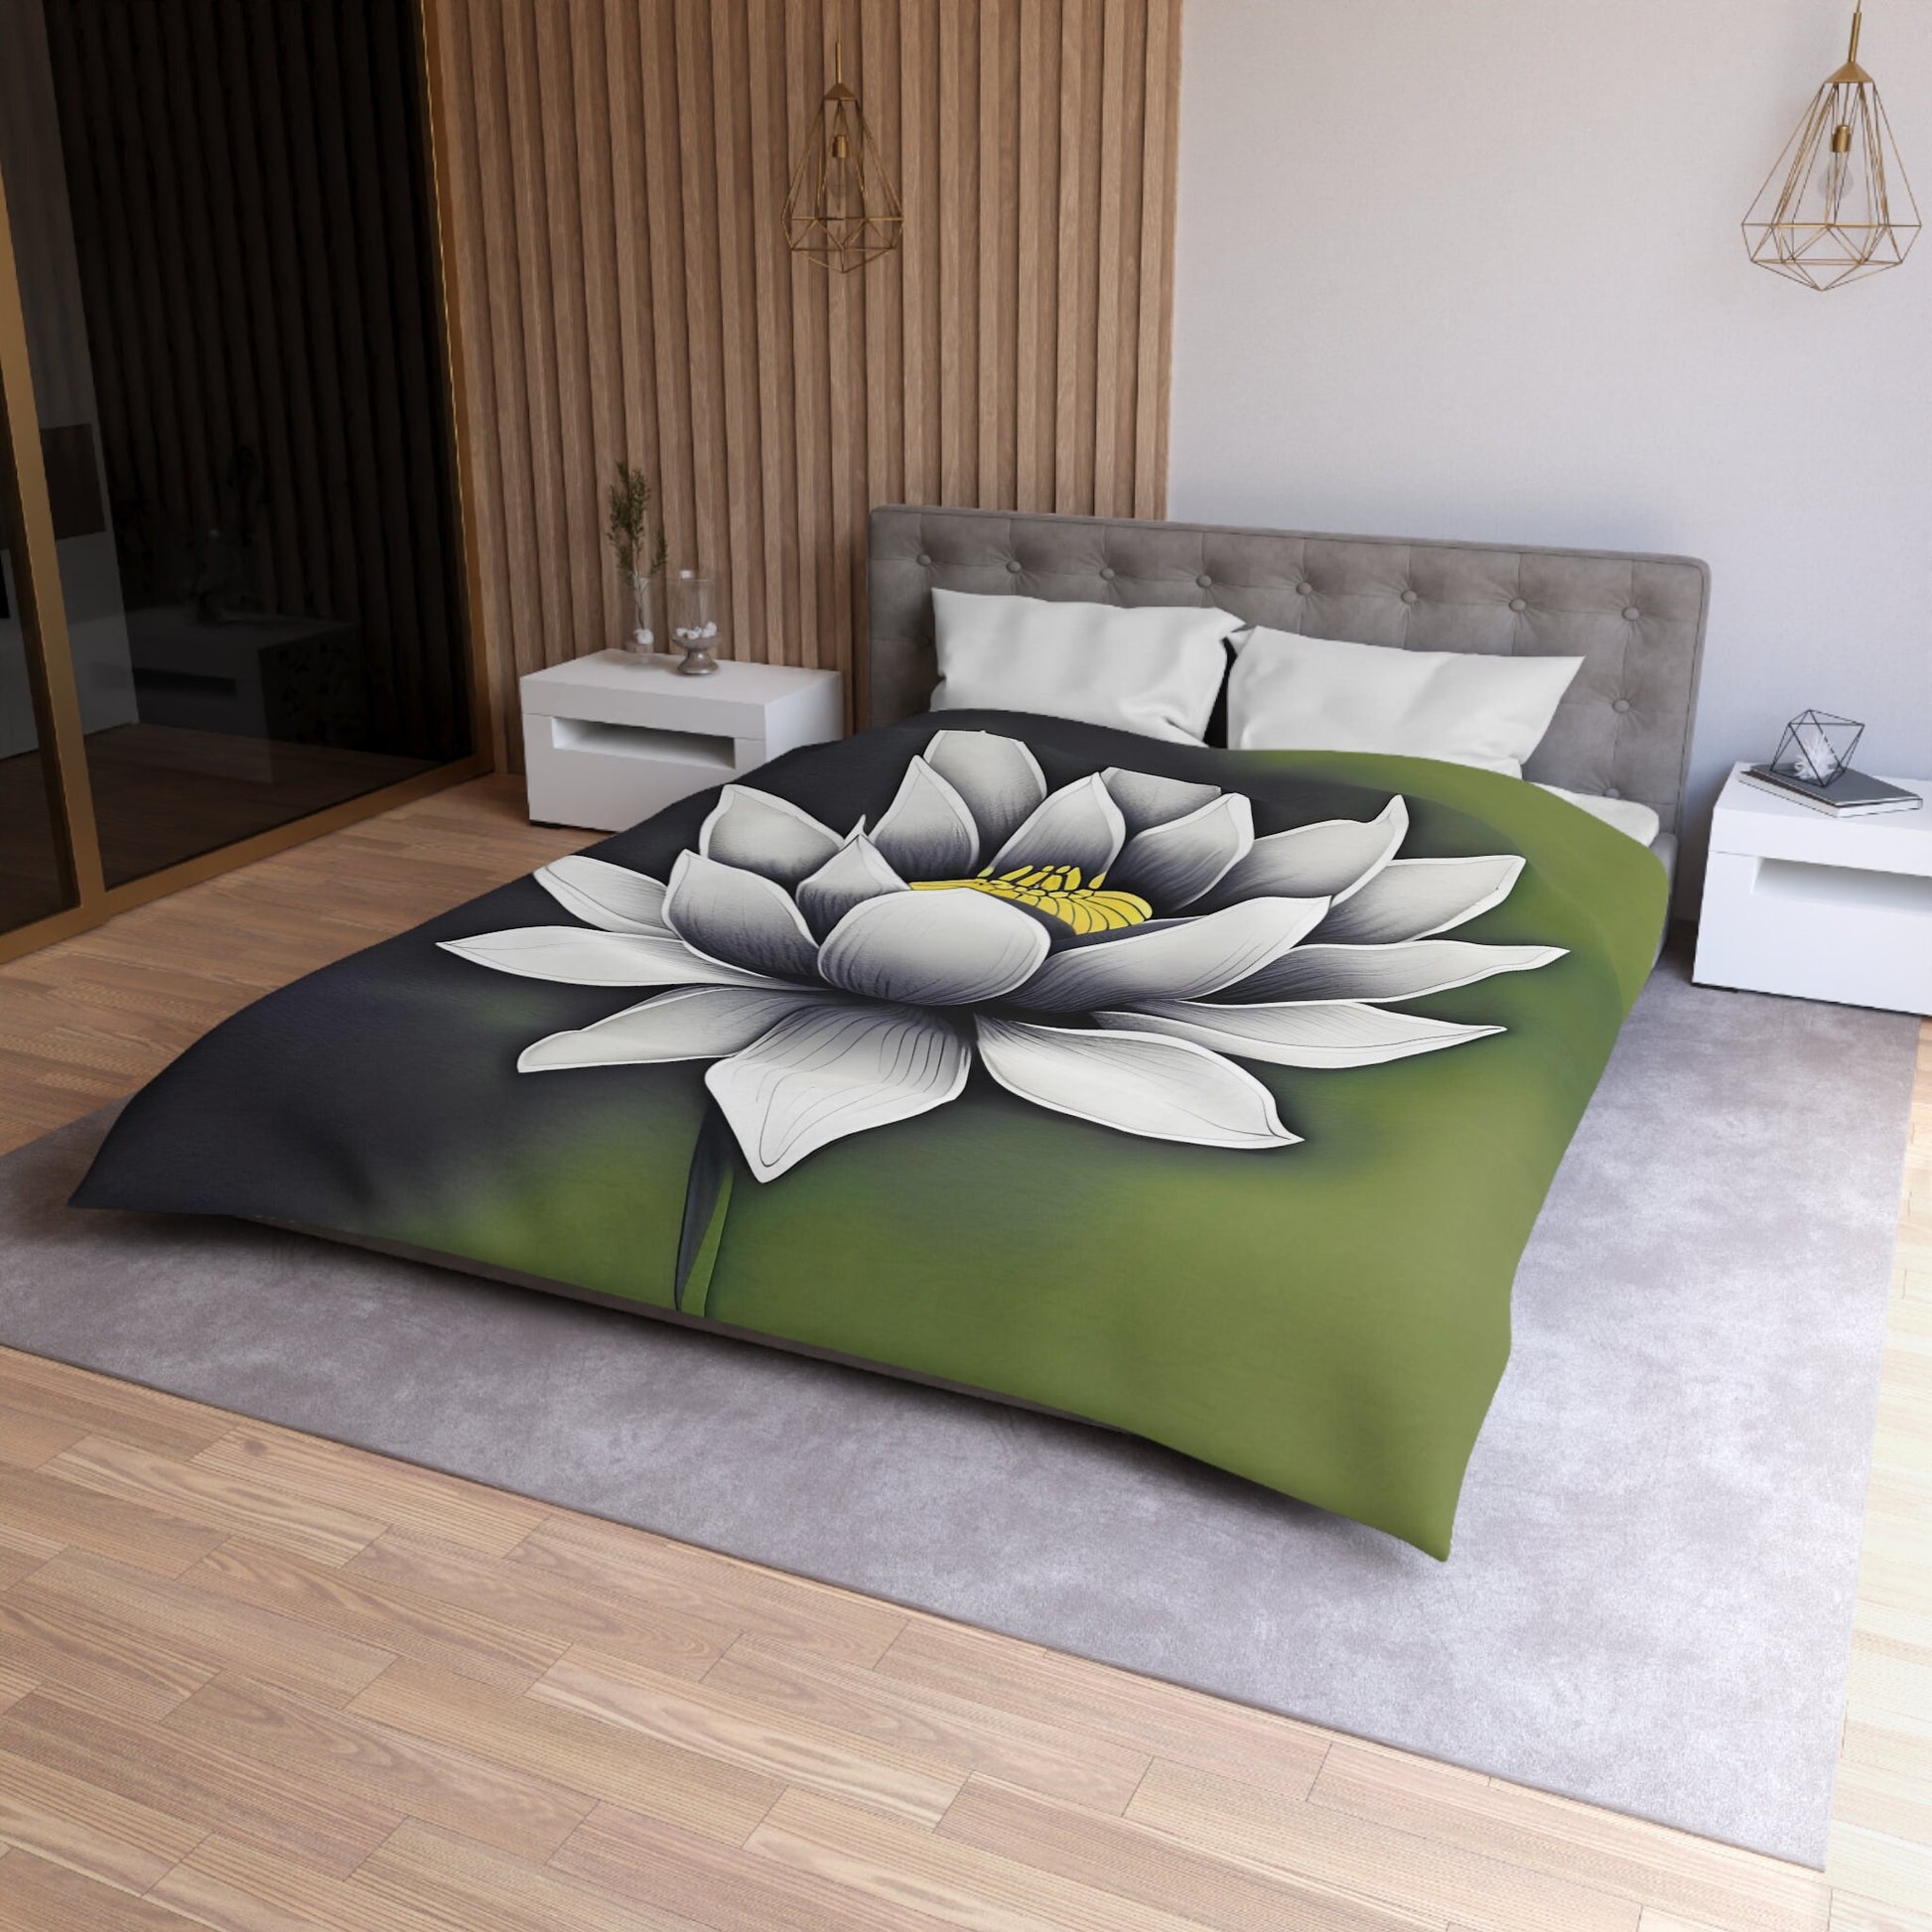 Lotus Comforter or Duvet Cover white lotus flower bedding sage green floral bedding zen comforter